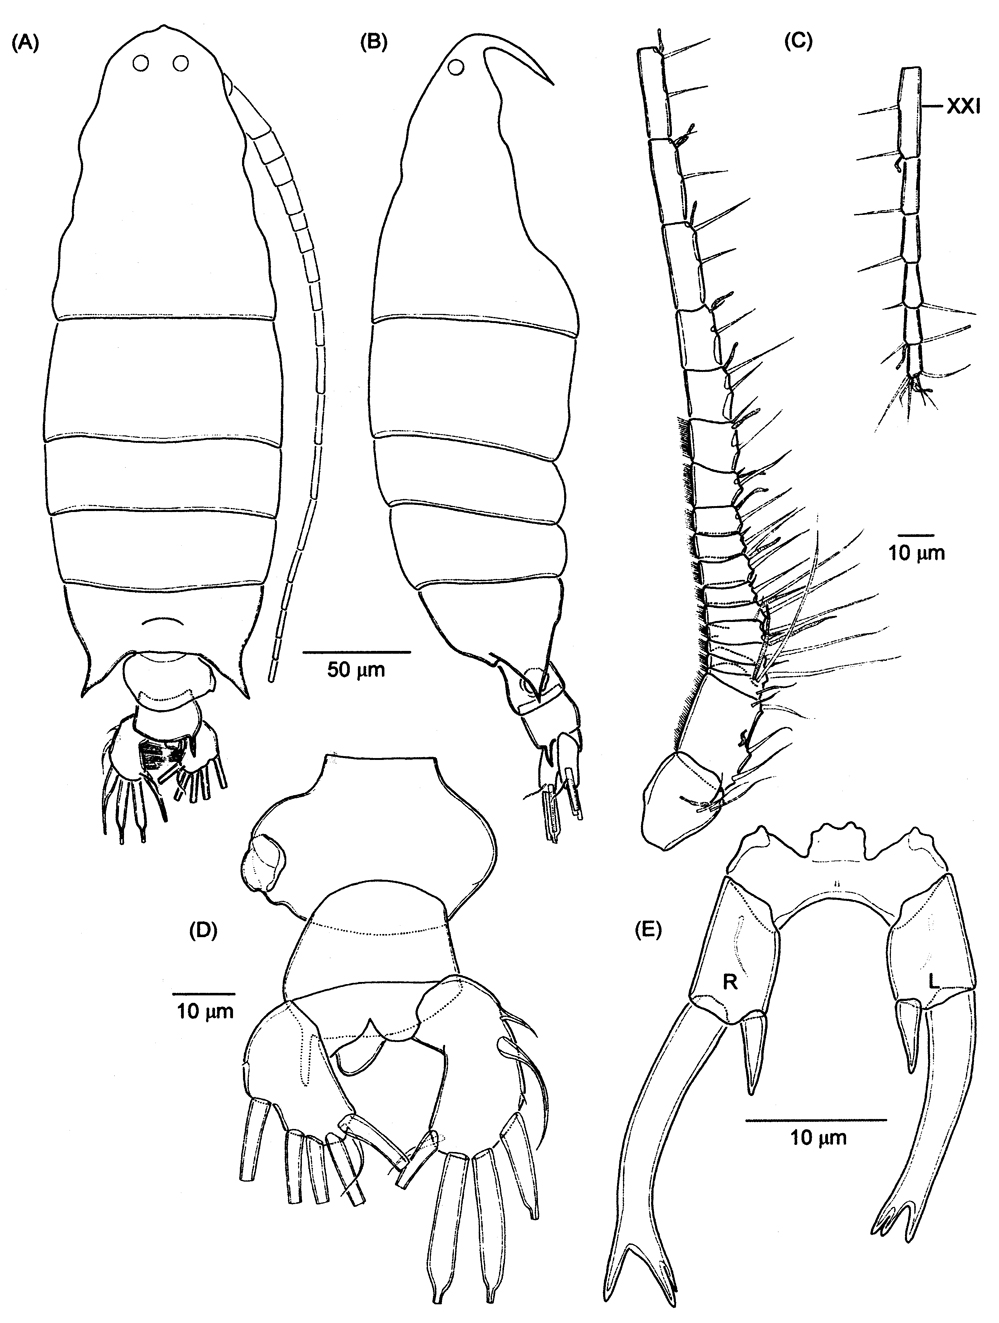 Species Labidocera acutifrons - Plate 12 of morphological figures